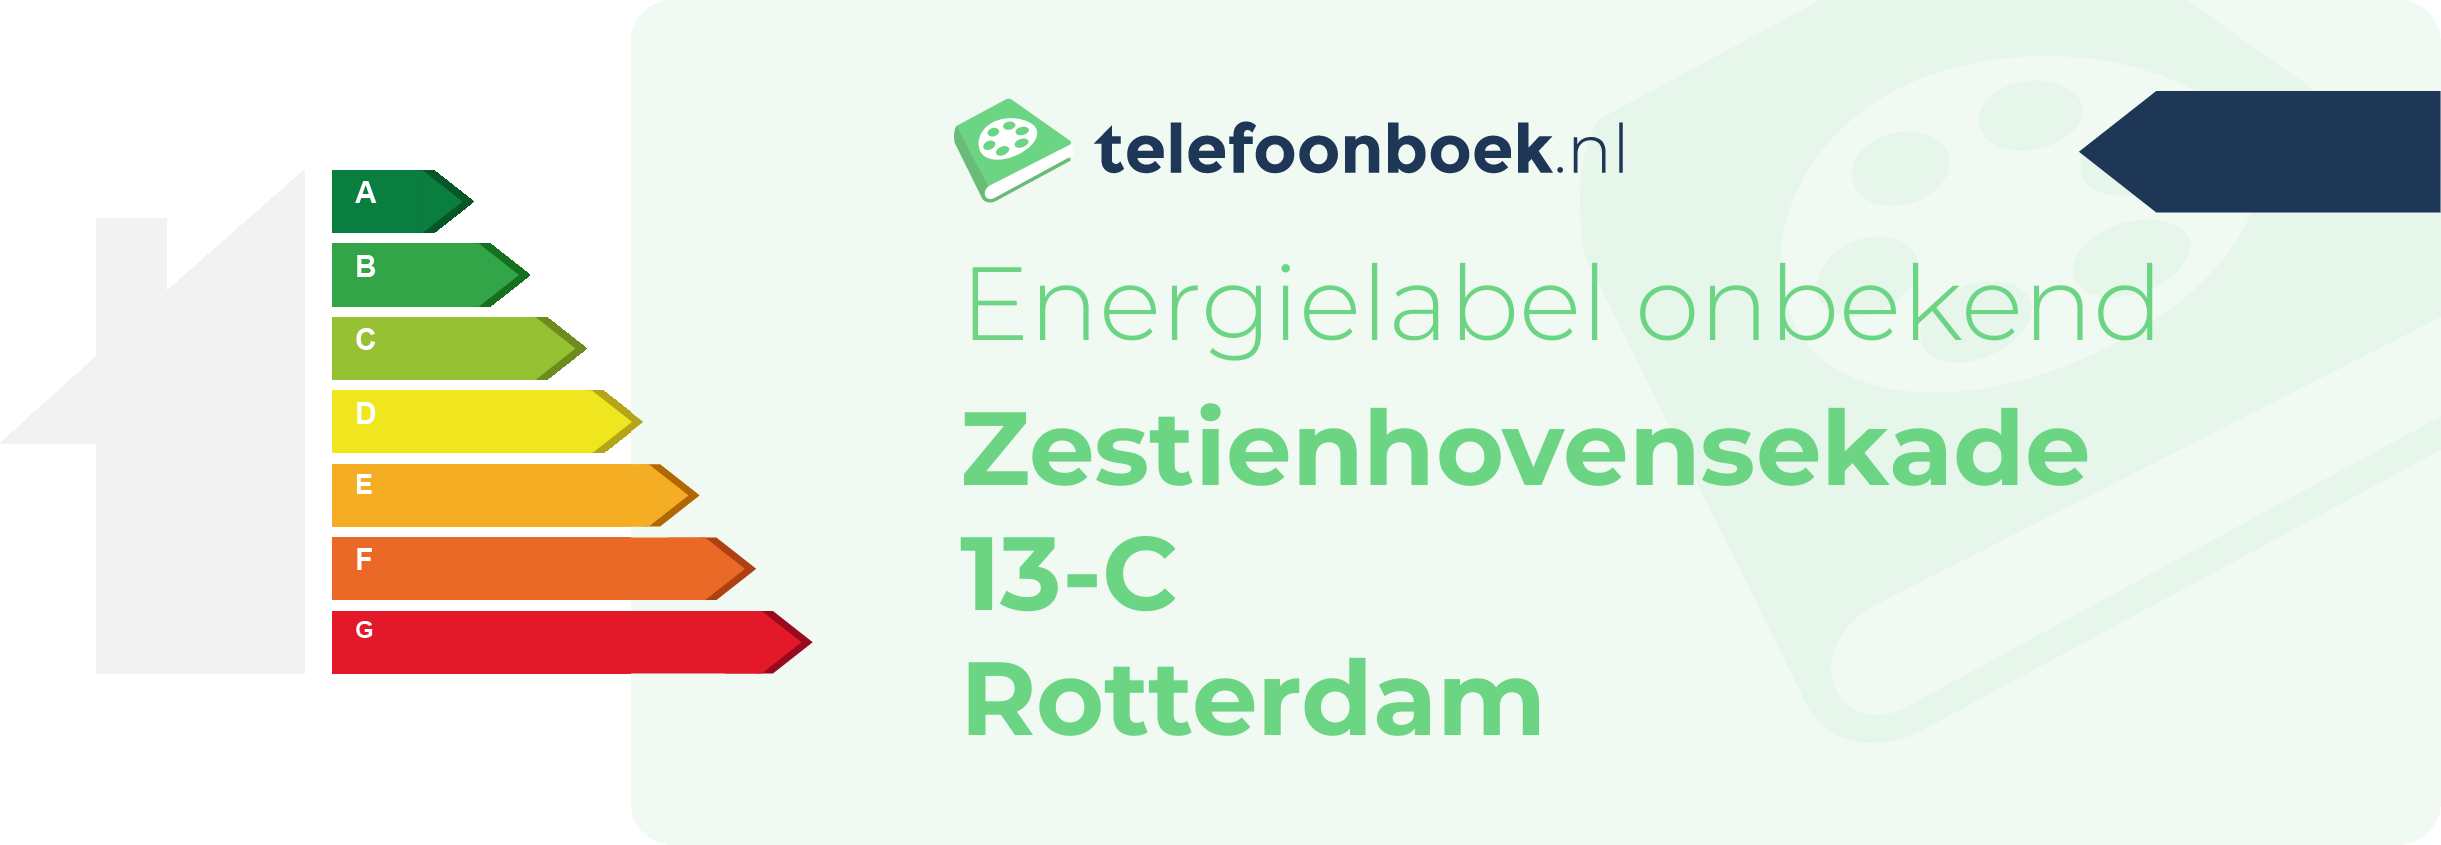 Energielabel Zestienhovensekade 13-C Rotterdam